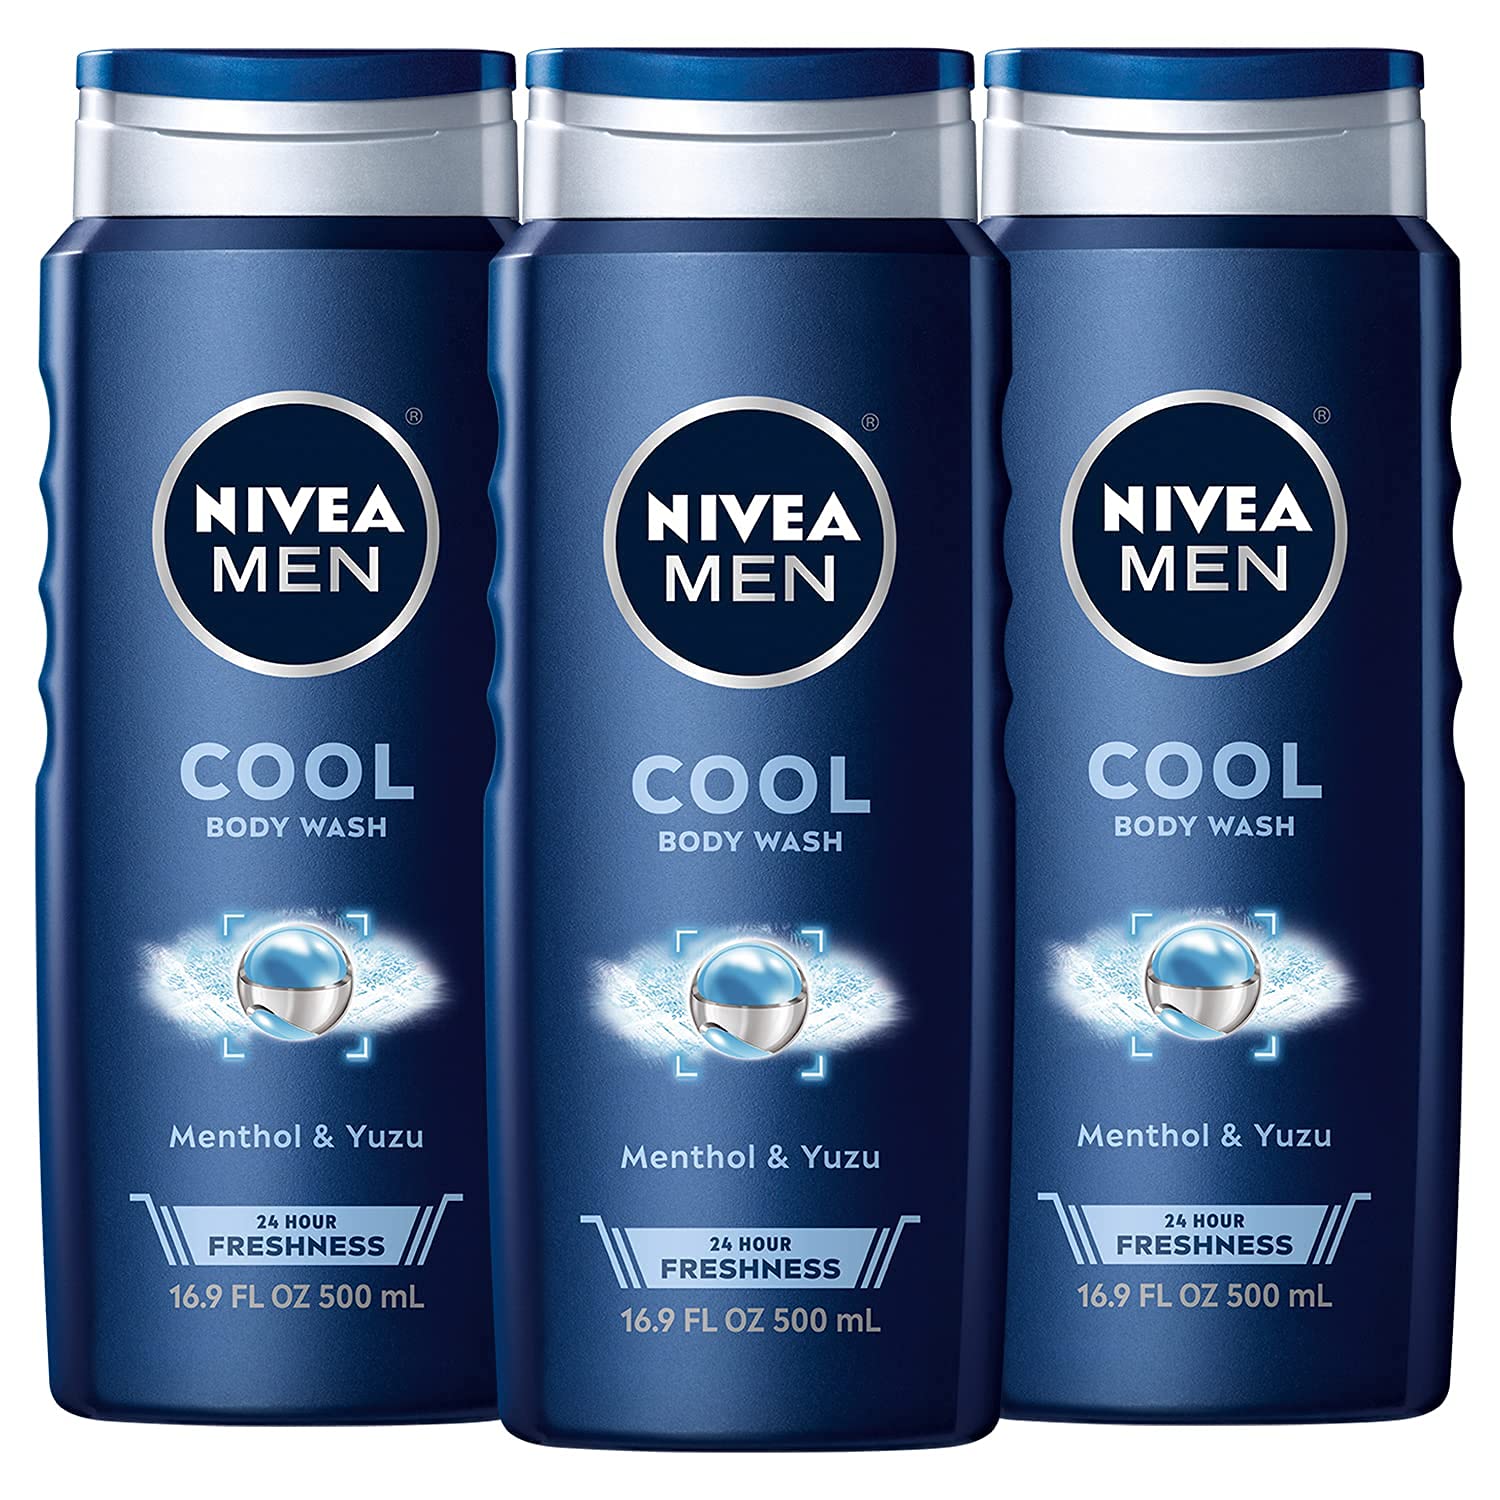 3-Pack 16.9-Oz Nivea Men Cool Body Wash (Menthol & Yuzu) $7.90 w/ S&S + Free Shipping w/ Prime or on $25+